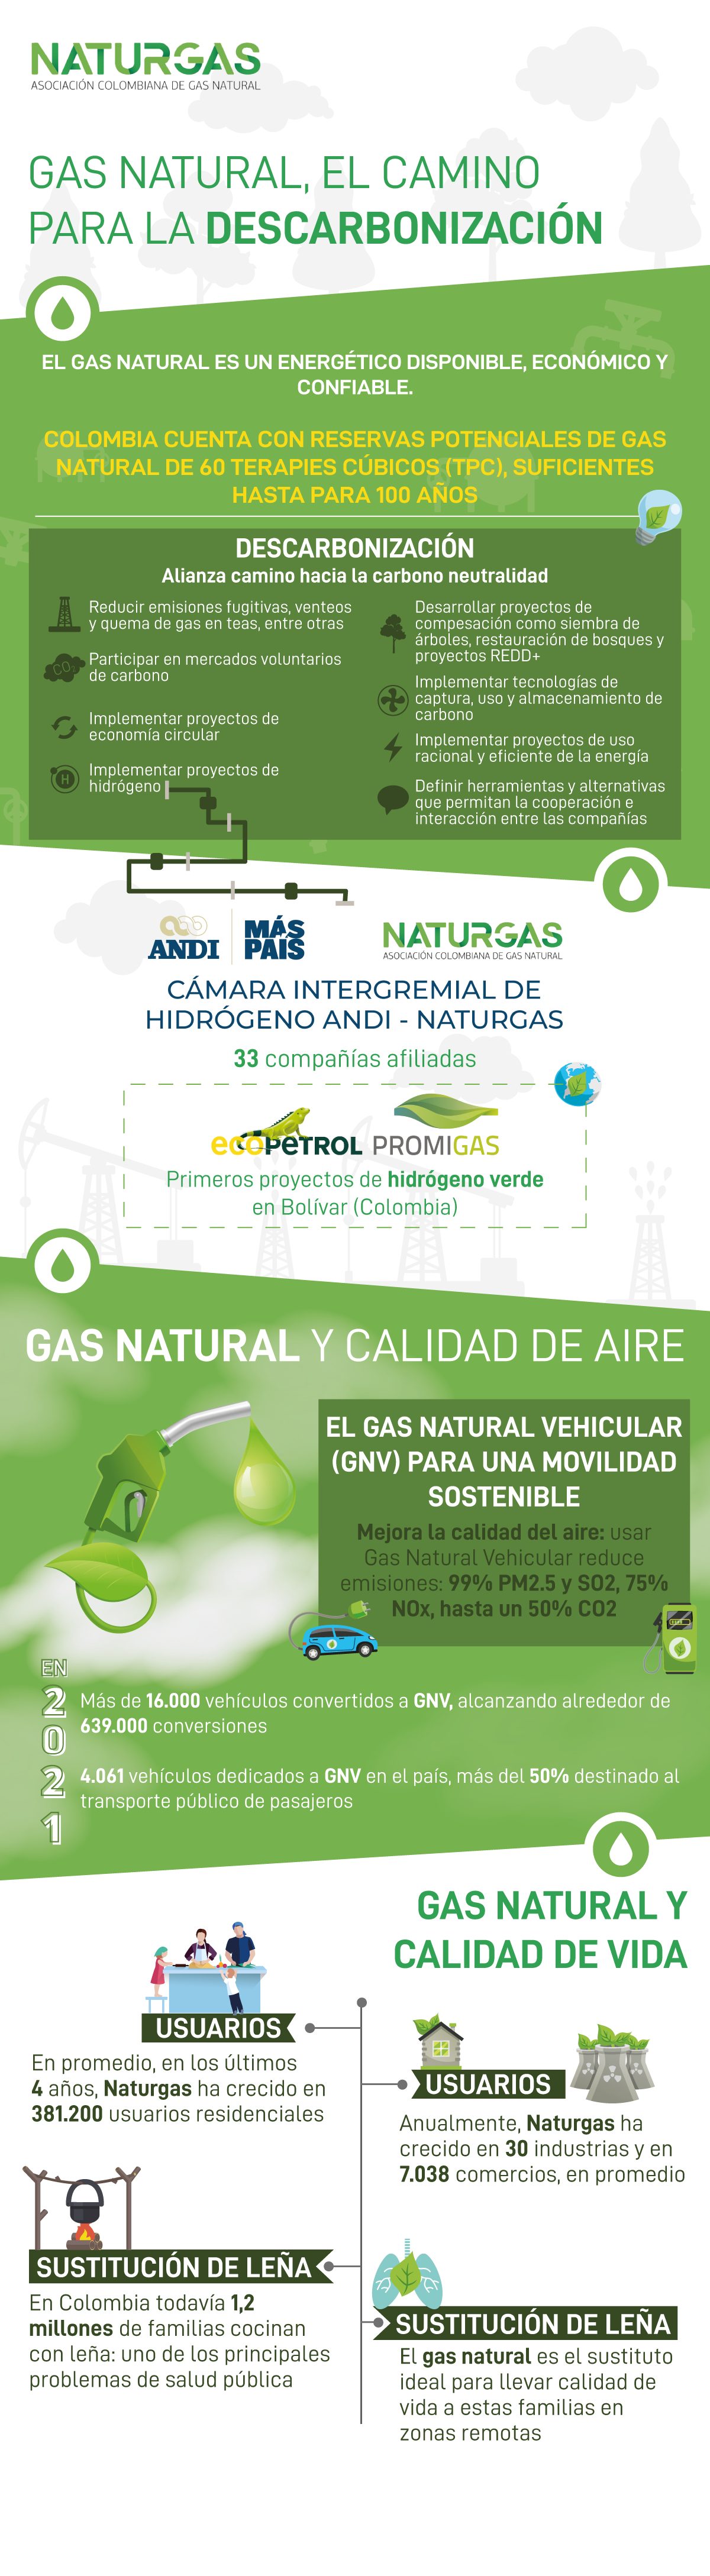 Naturgas